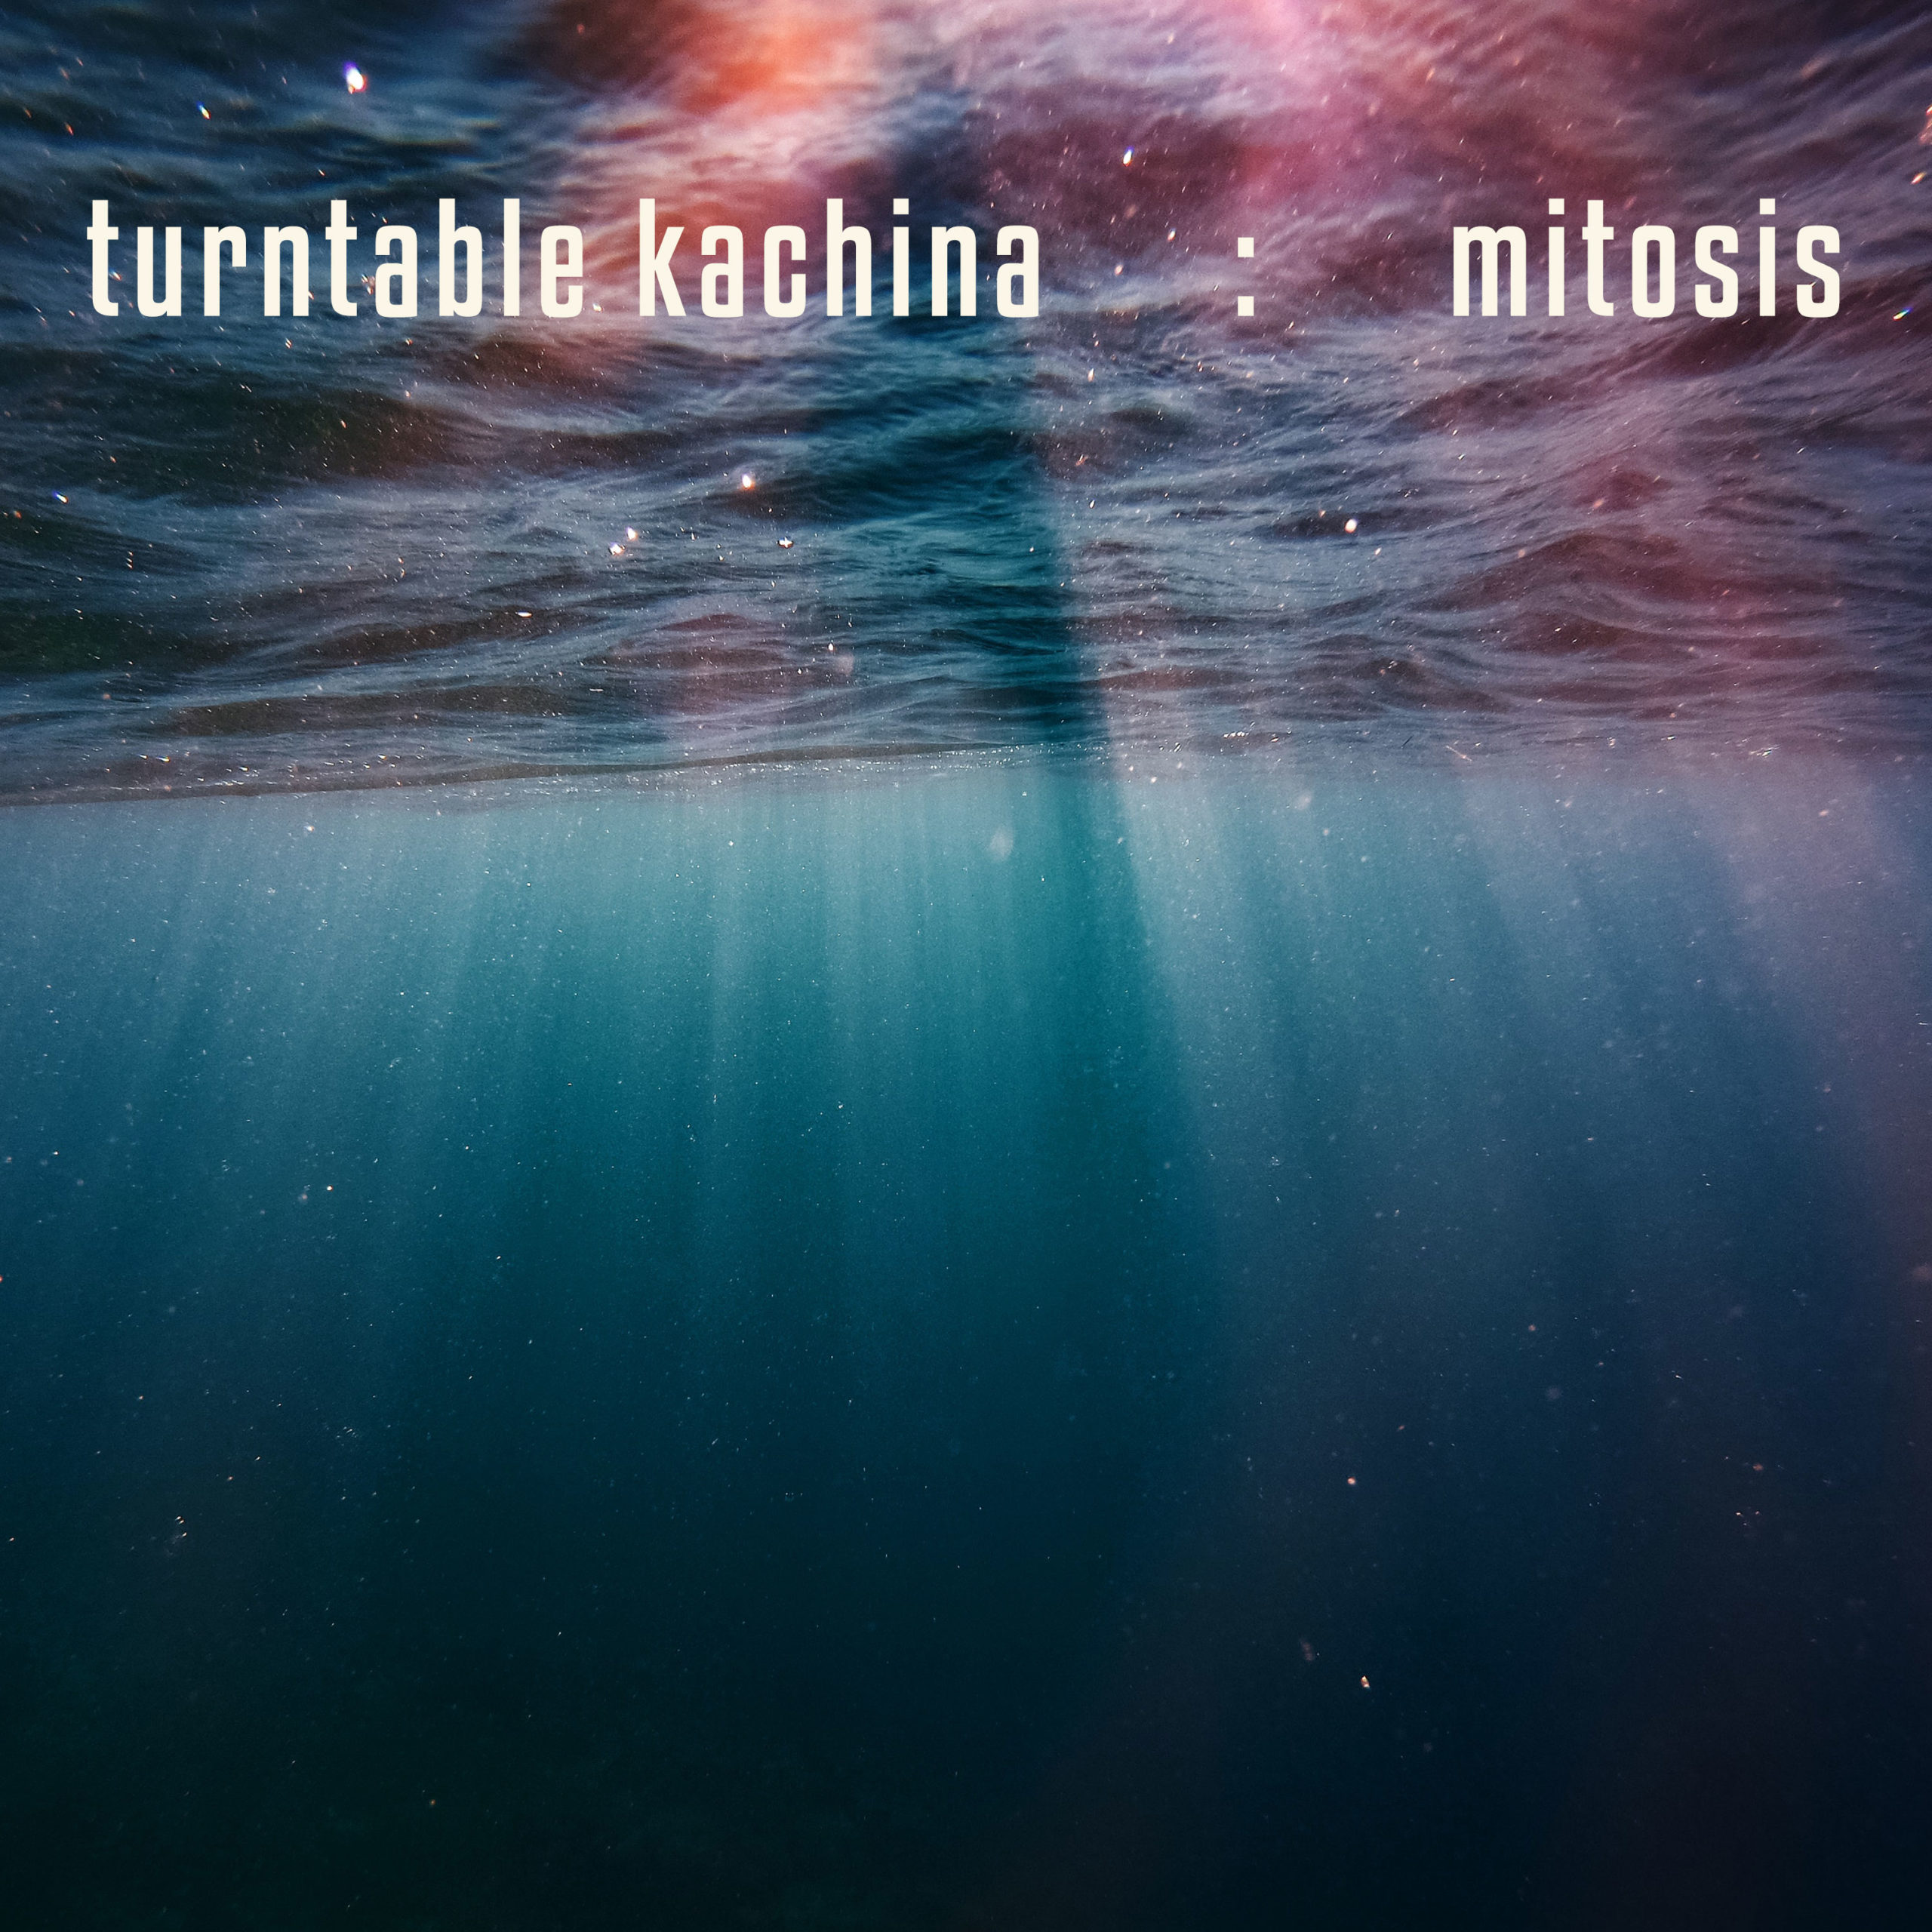 mitosis-album-cover-turntable-kachina